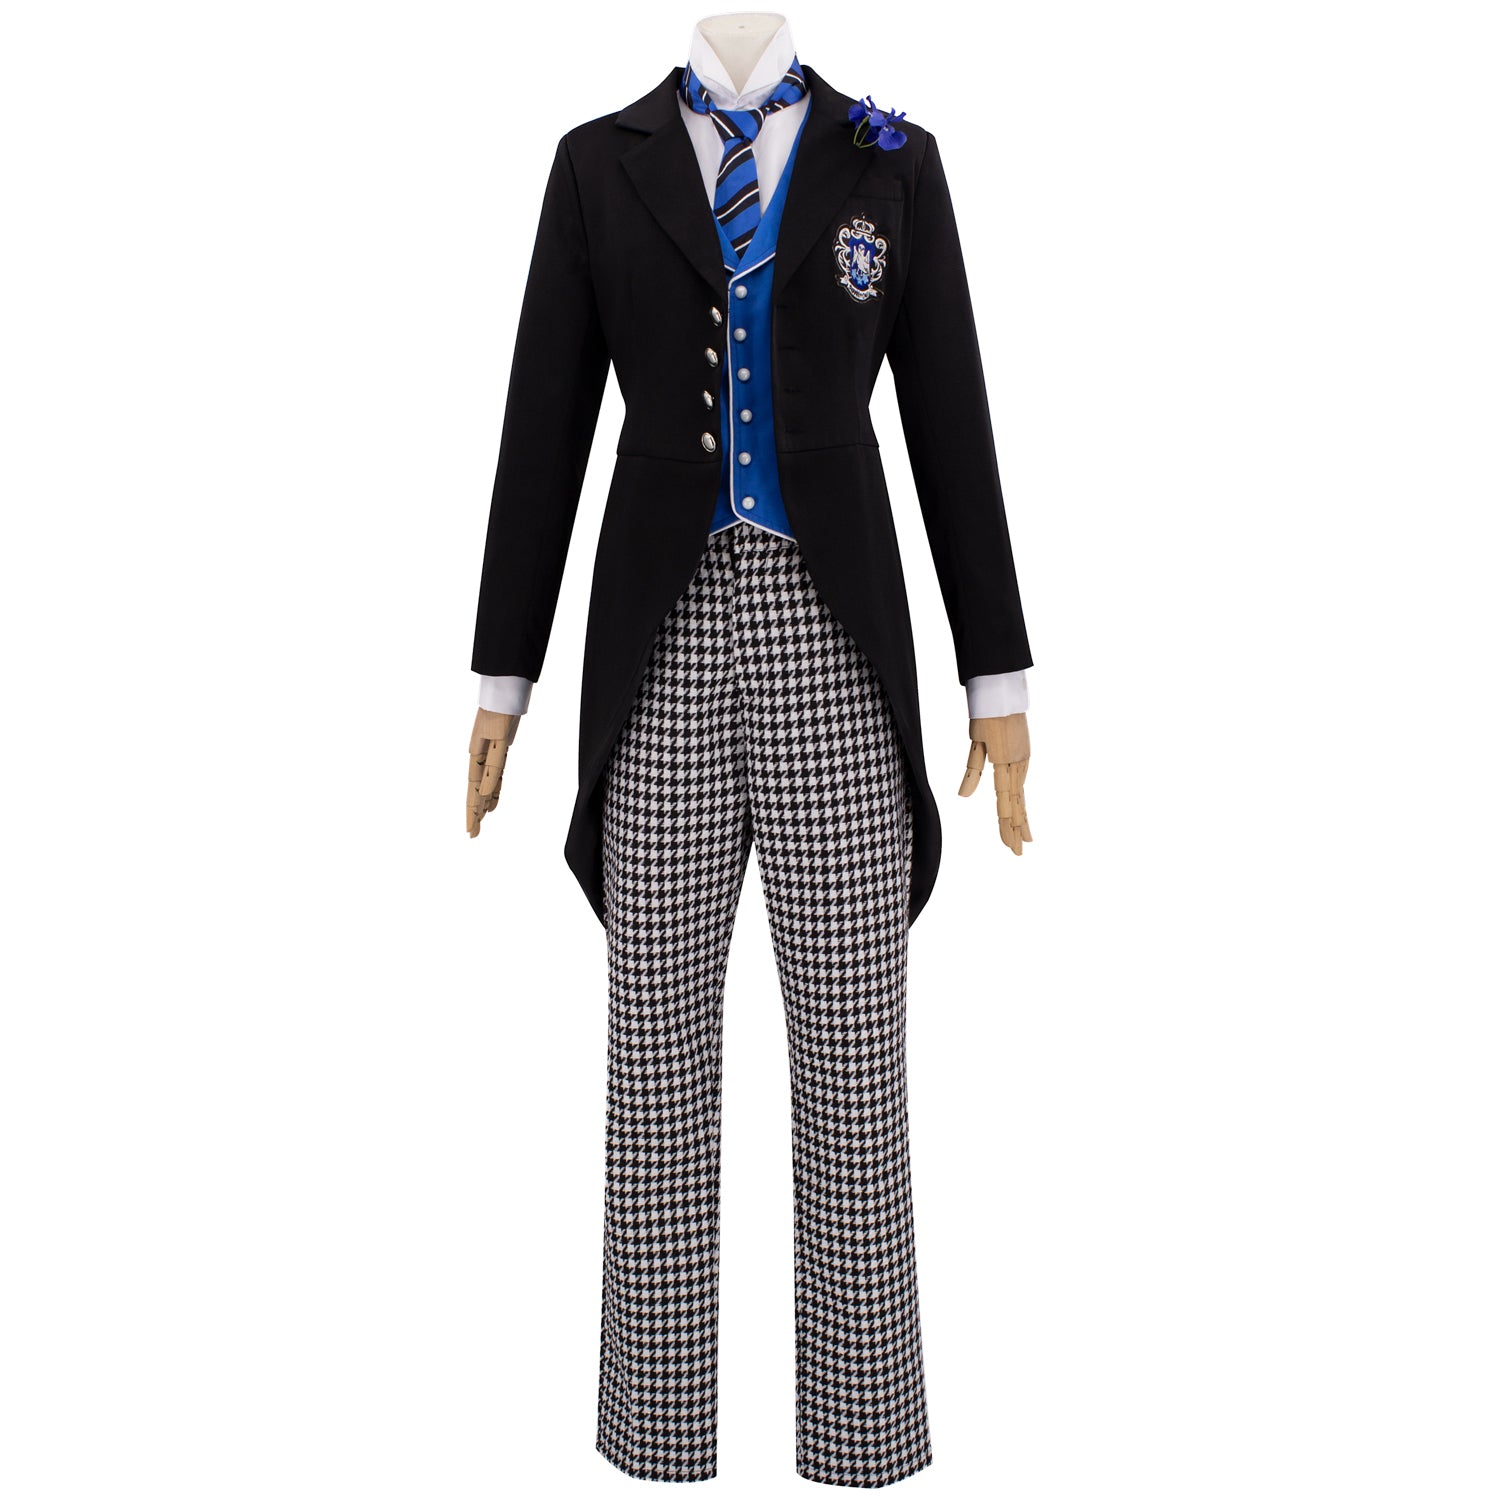 Black Butler Public School Arc Lawrence Bluewer Cosplay Costume